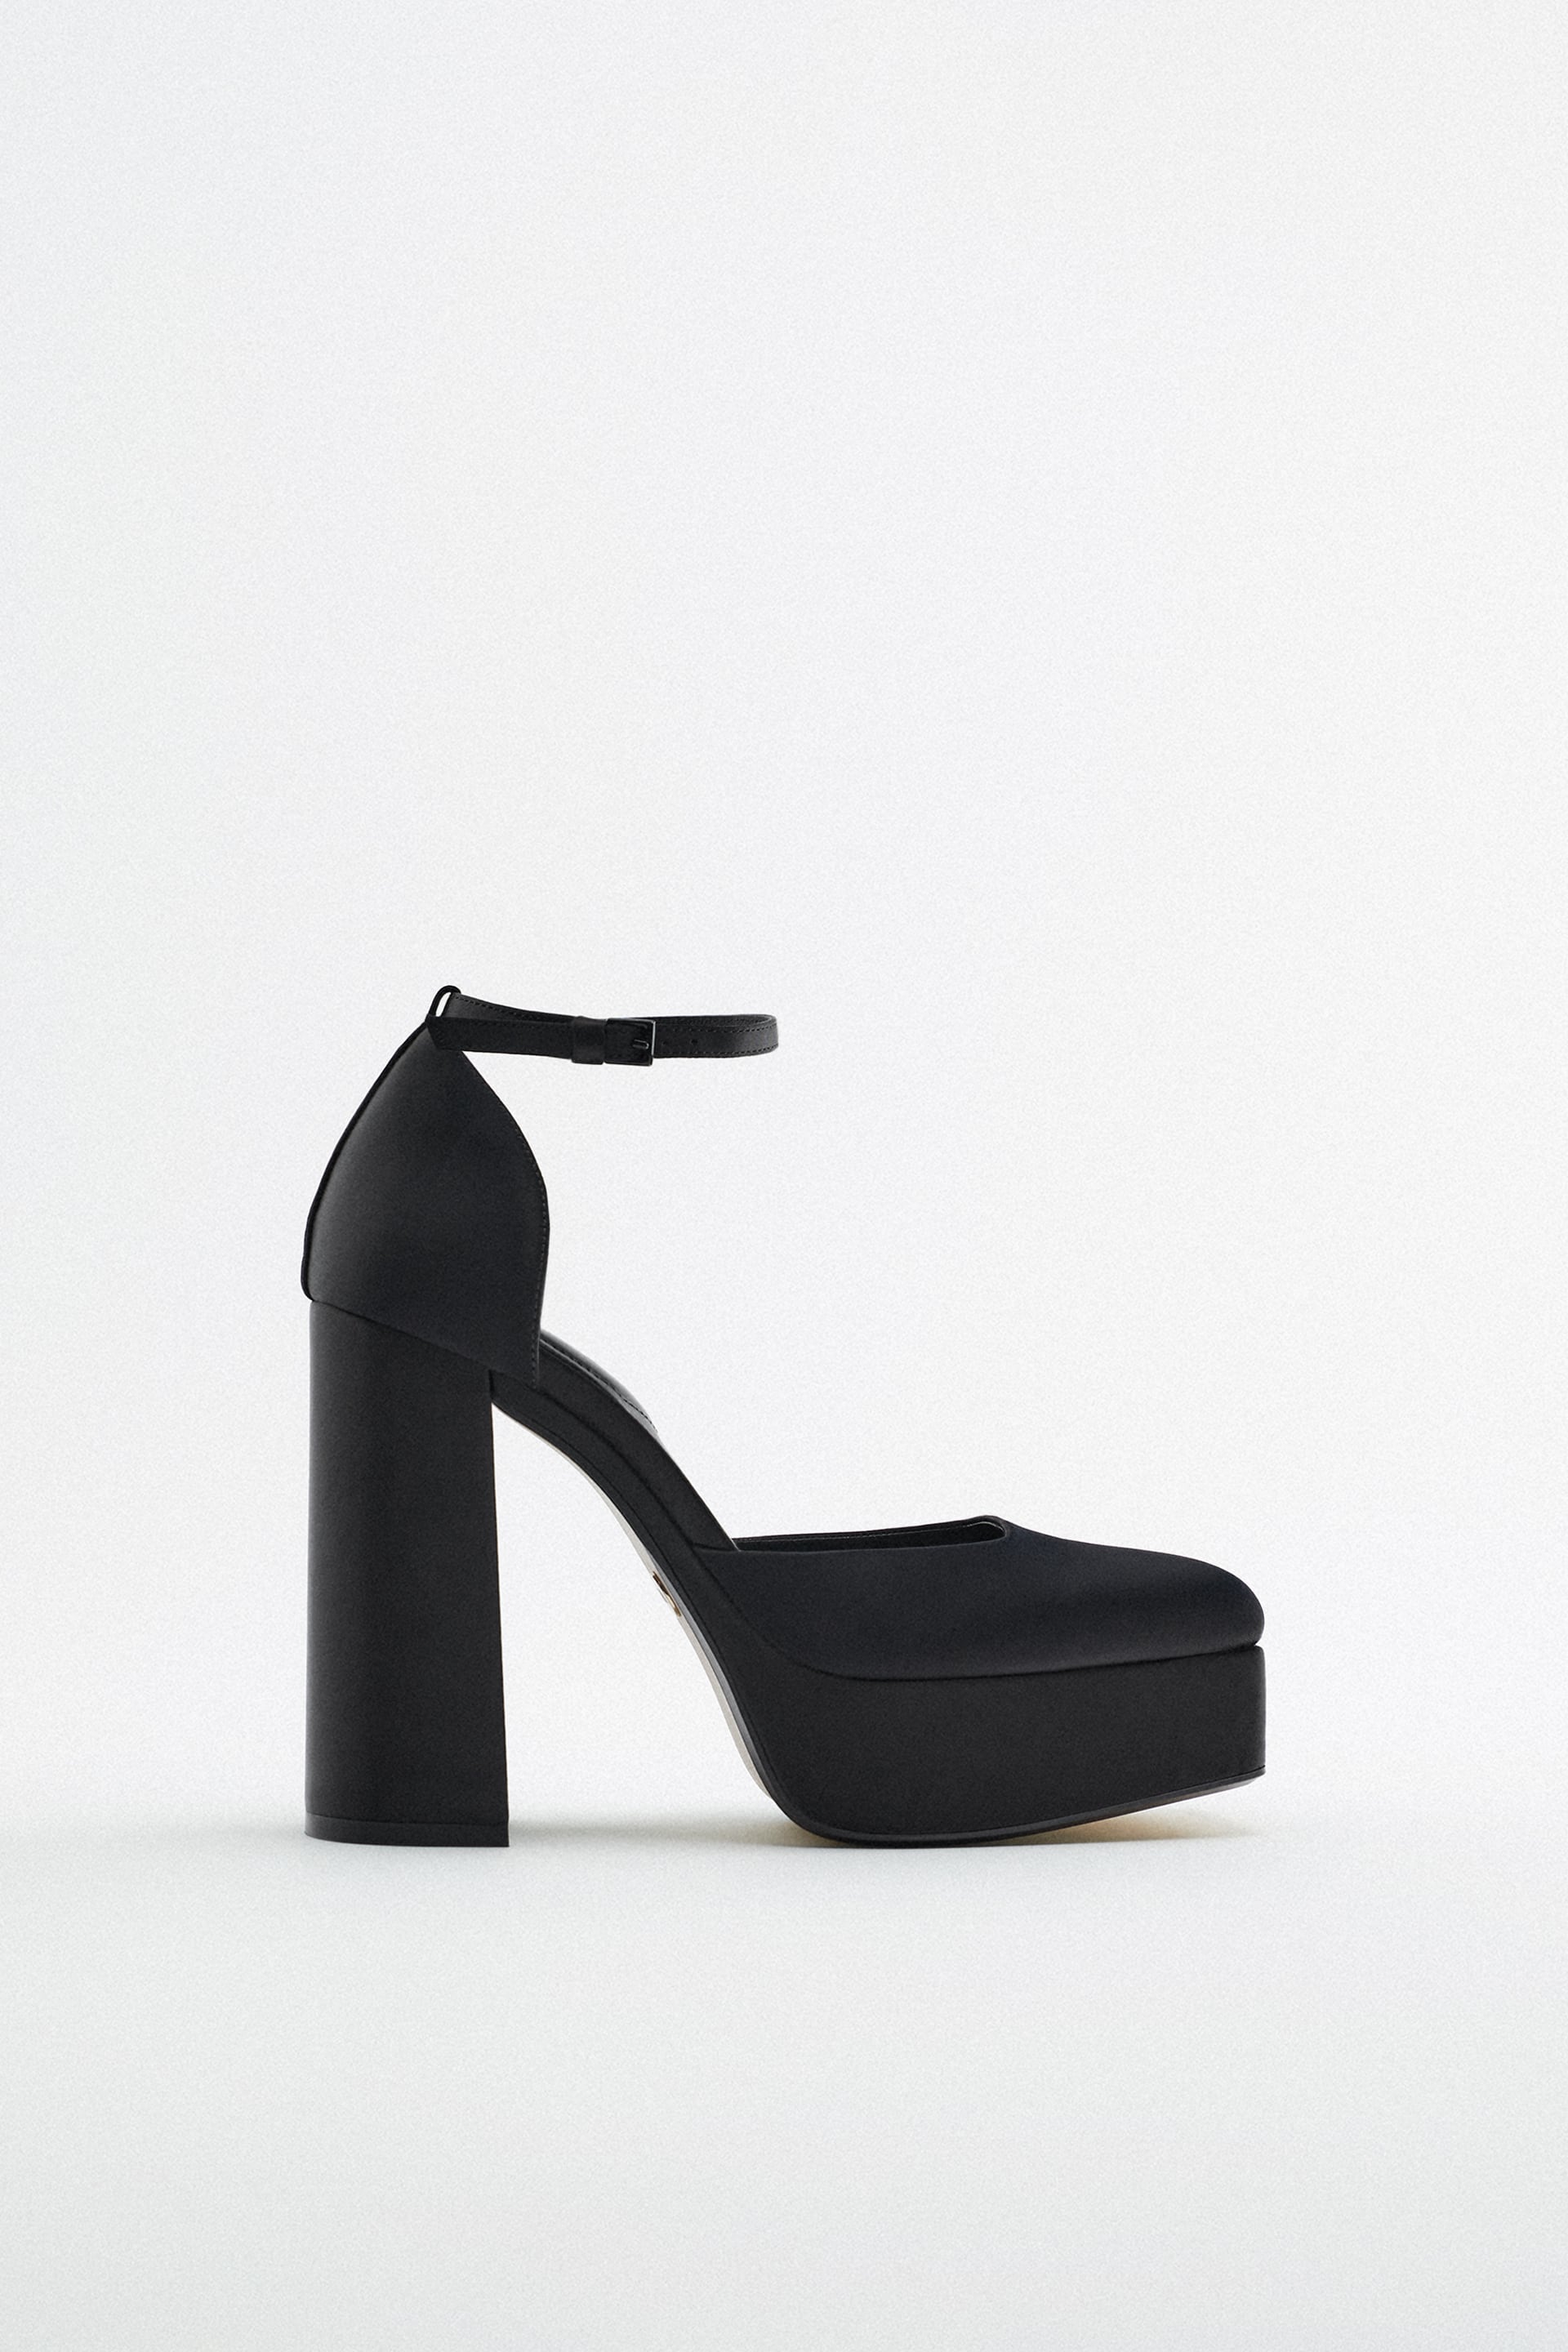 Zara Heeled Platform Shoes